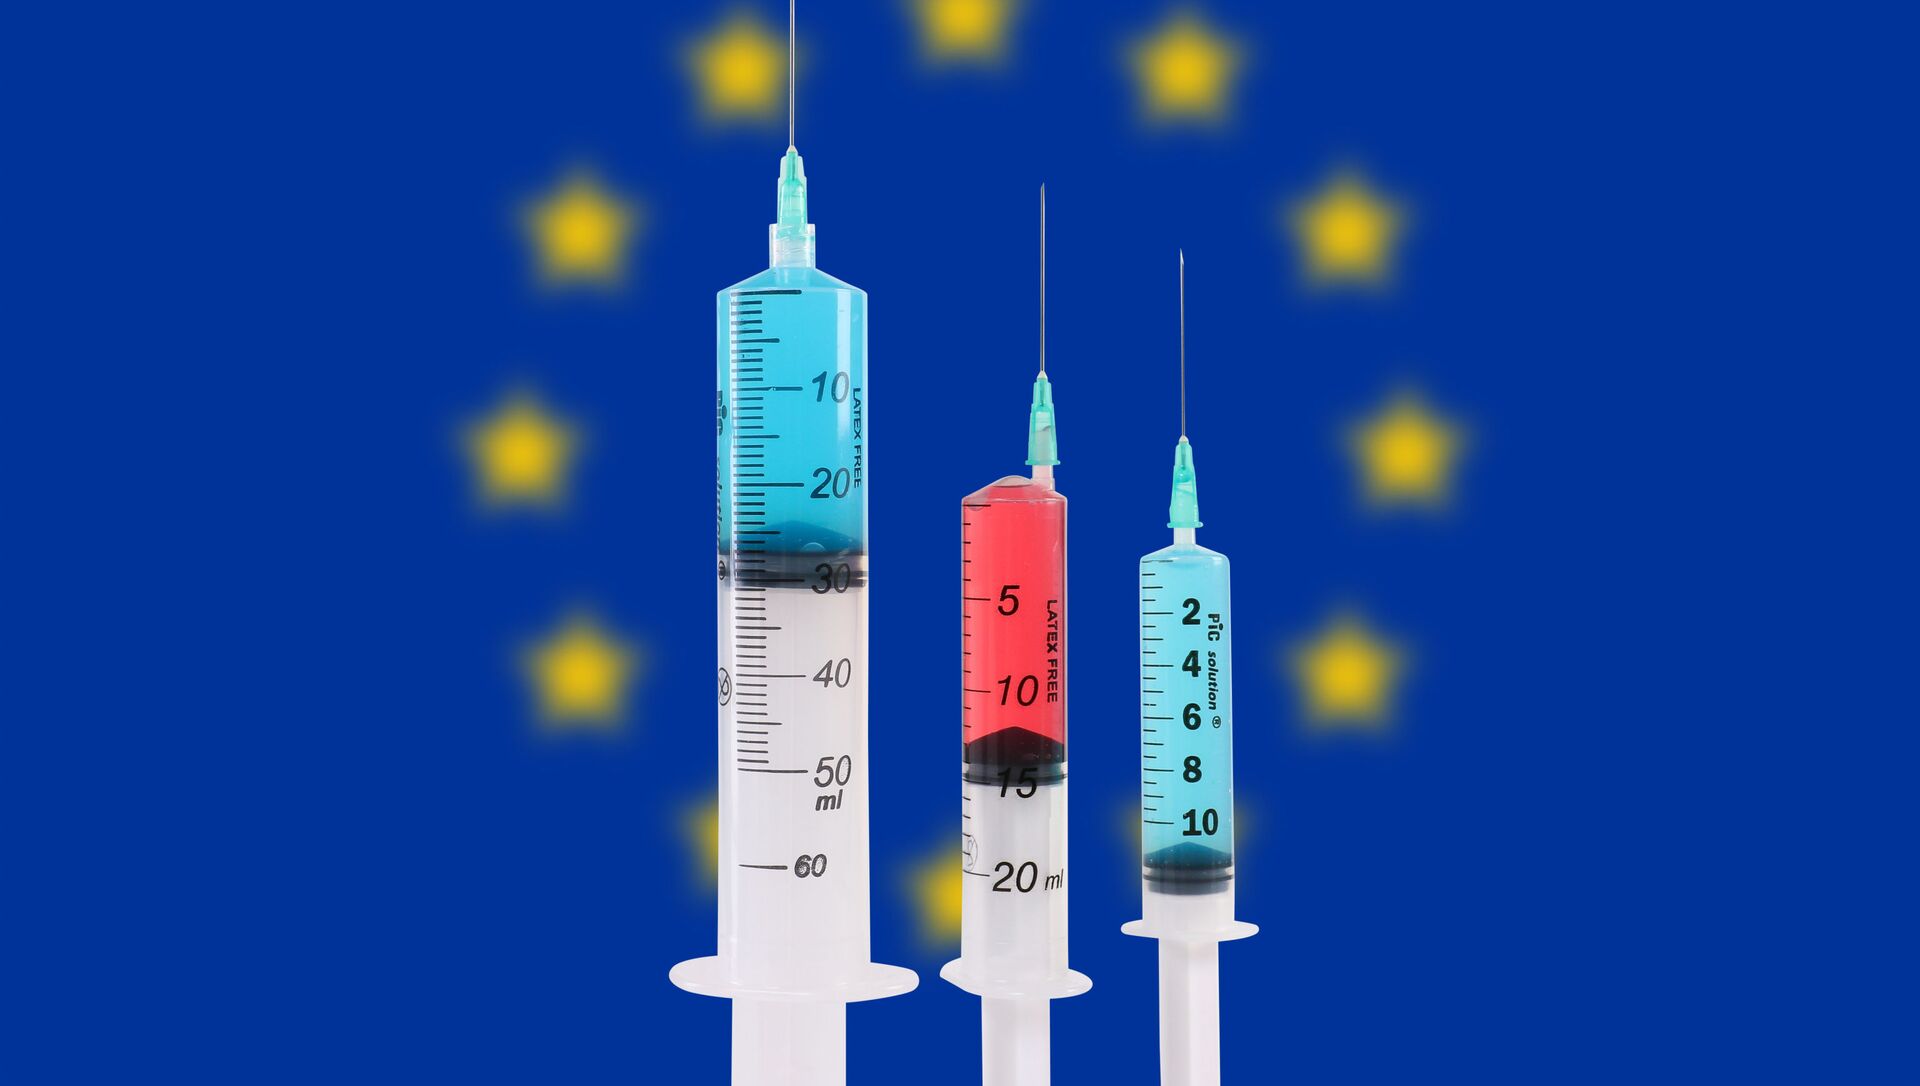 Campagne de vaccination en Europe (image d'illustration) - Sputnik Afrique, 1920, 25.02.2021